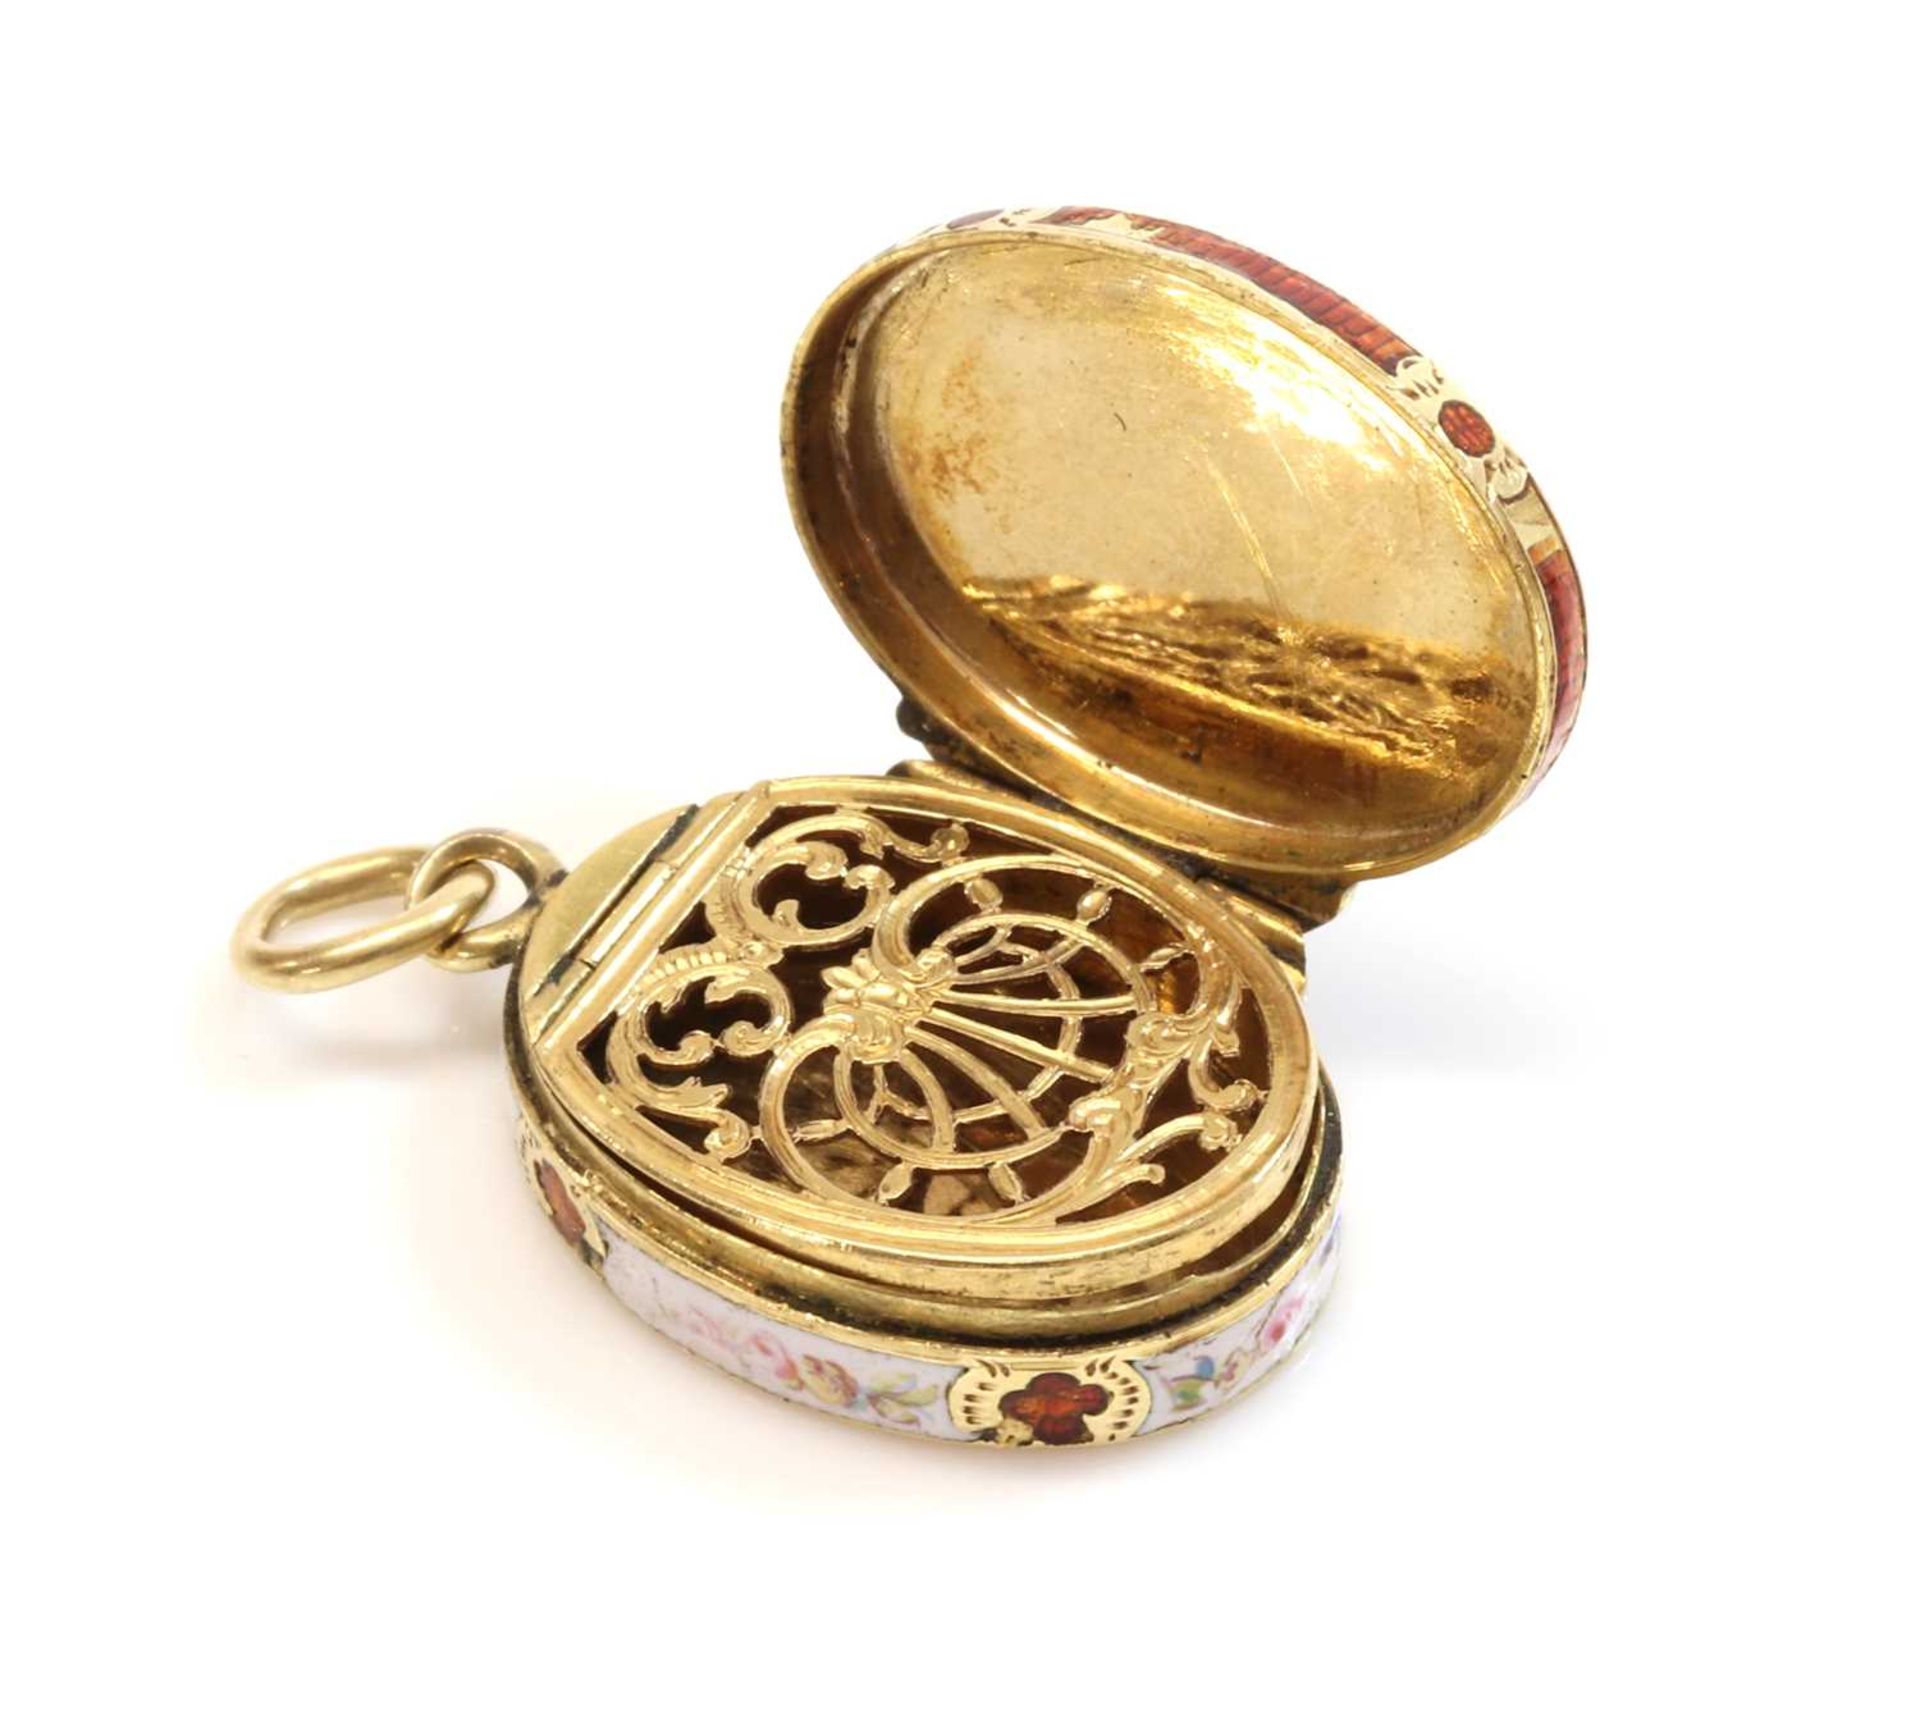 A miniature gold oval locket form vinaigrette, - Image 2 of 2